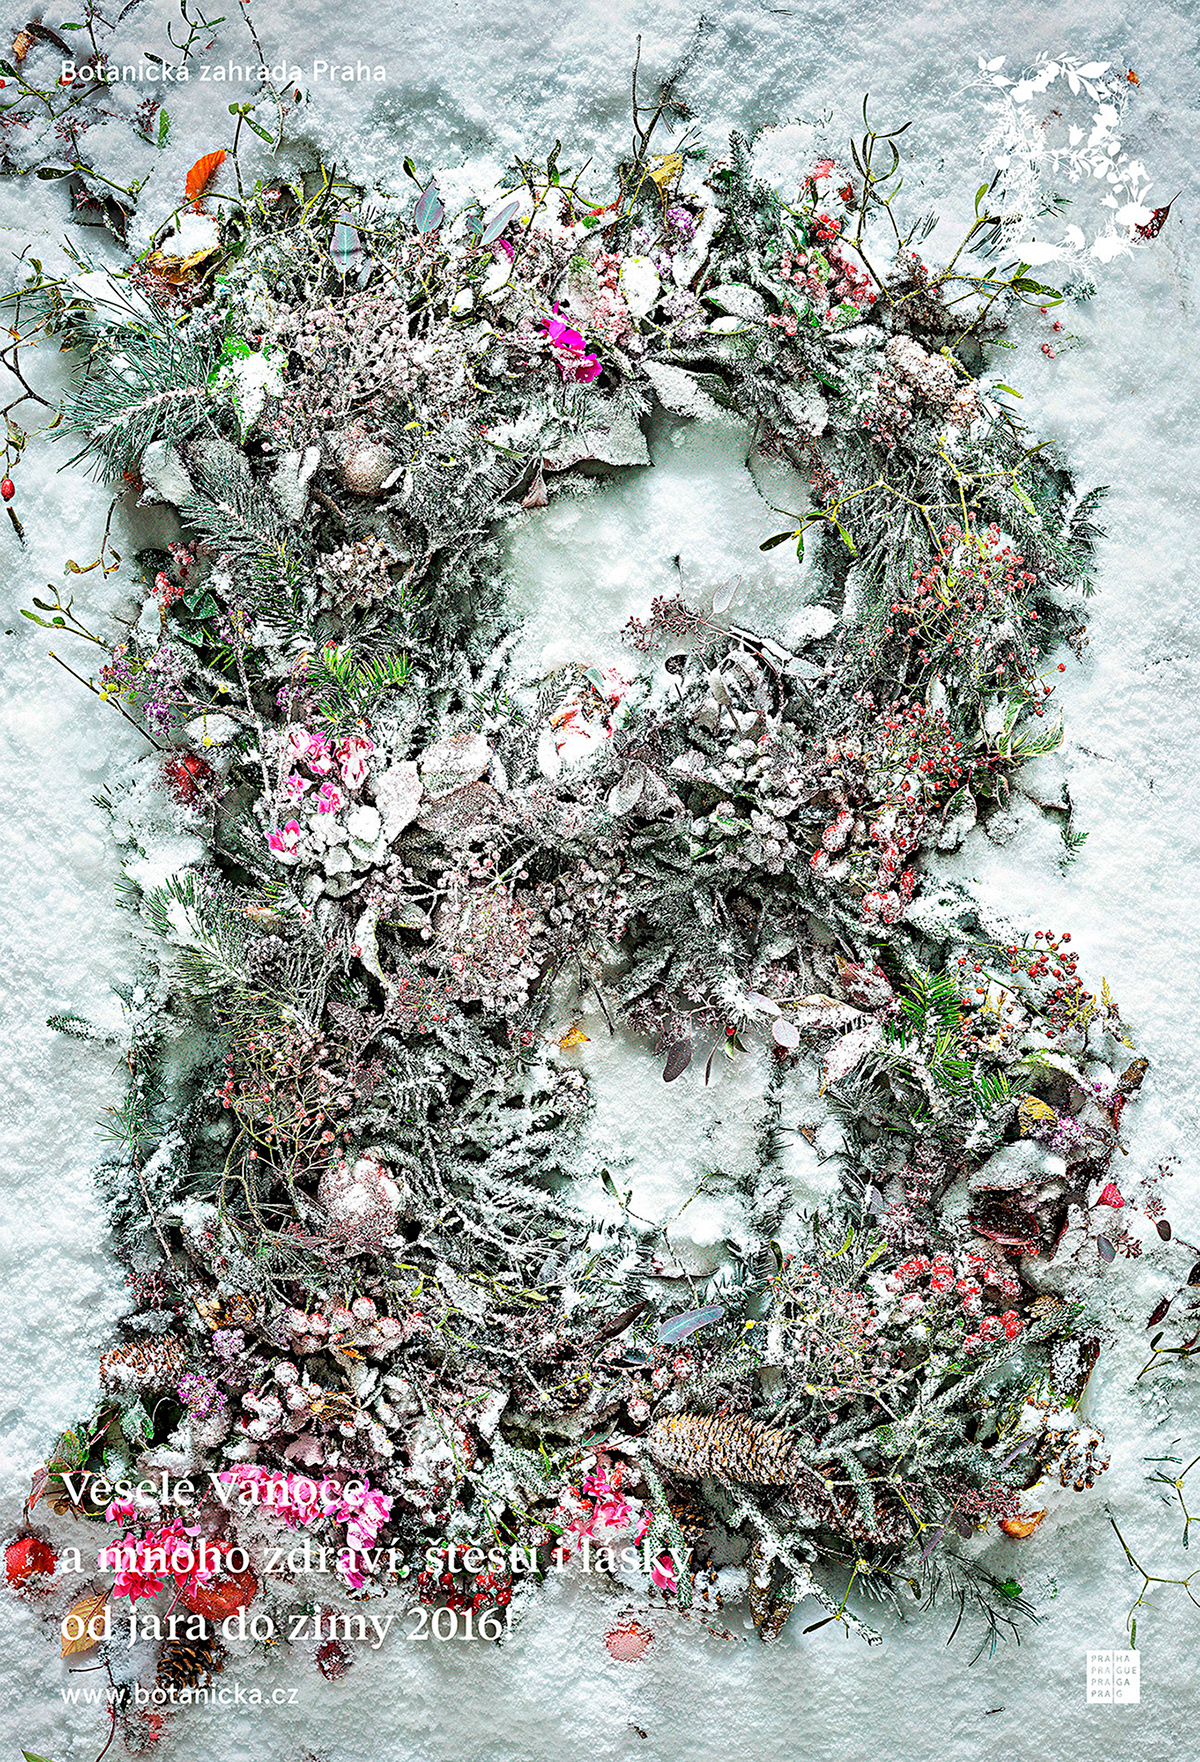 identity botanical garden najbrt Photography  jirasek prague graphic design  lednická